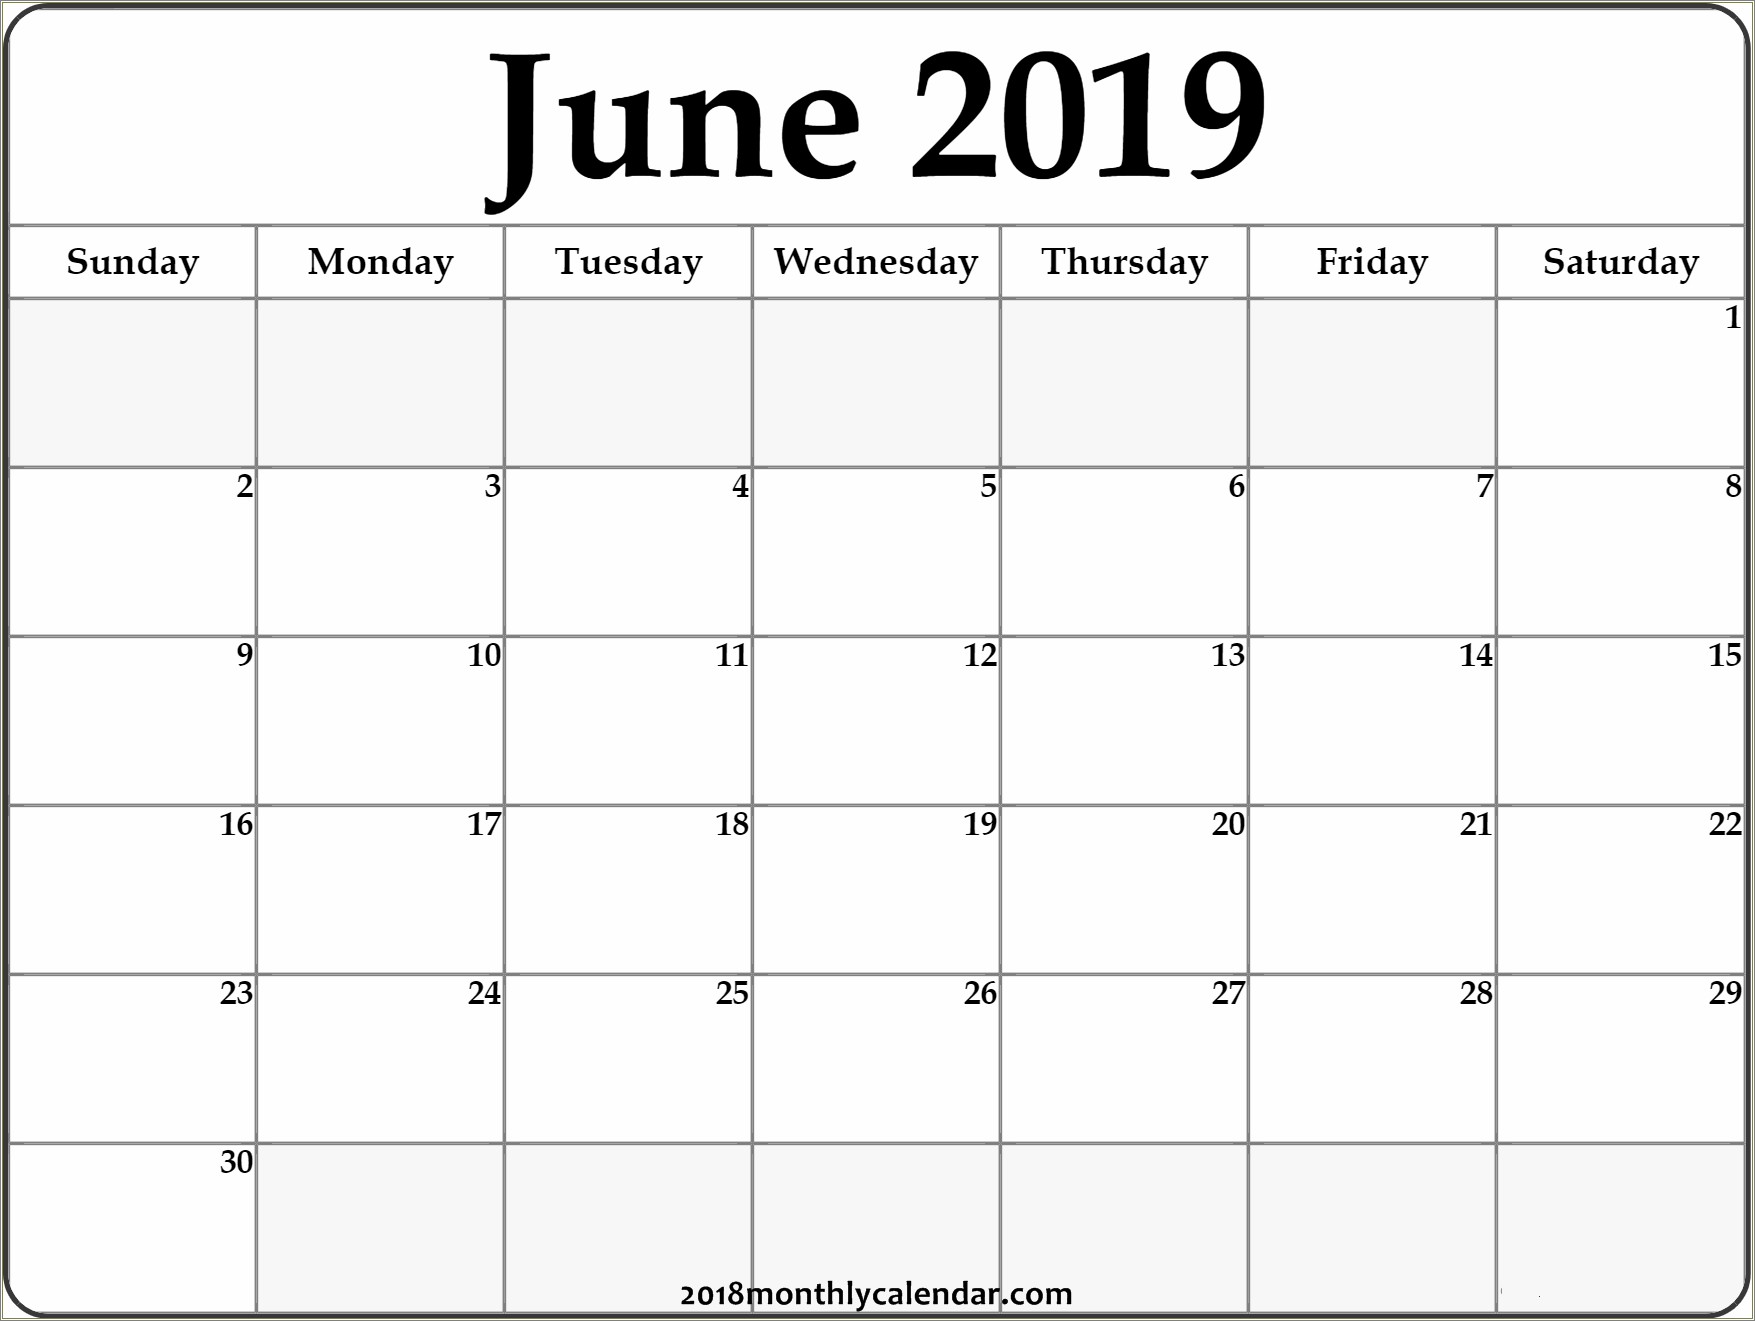 Free Monthly Calendar Template June 2019